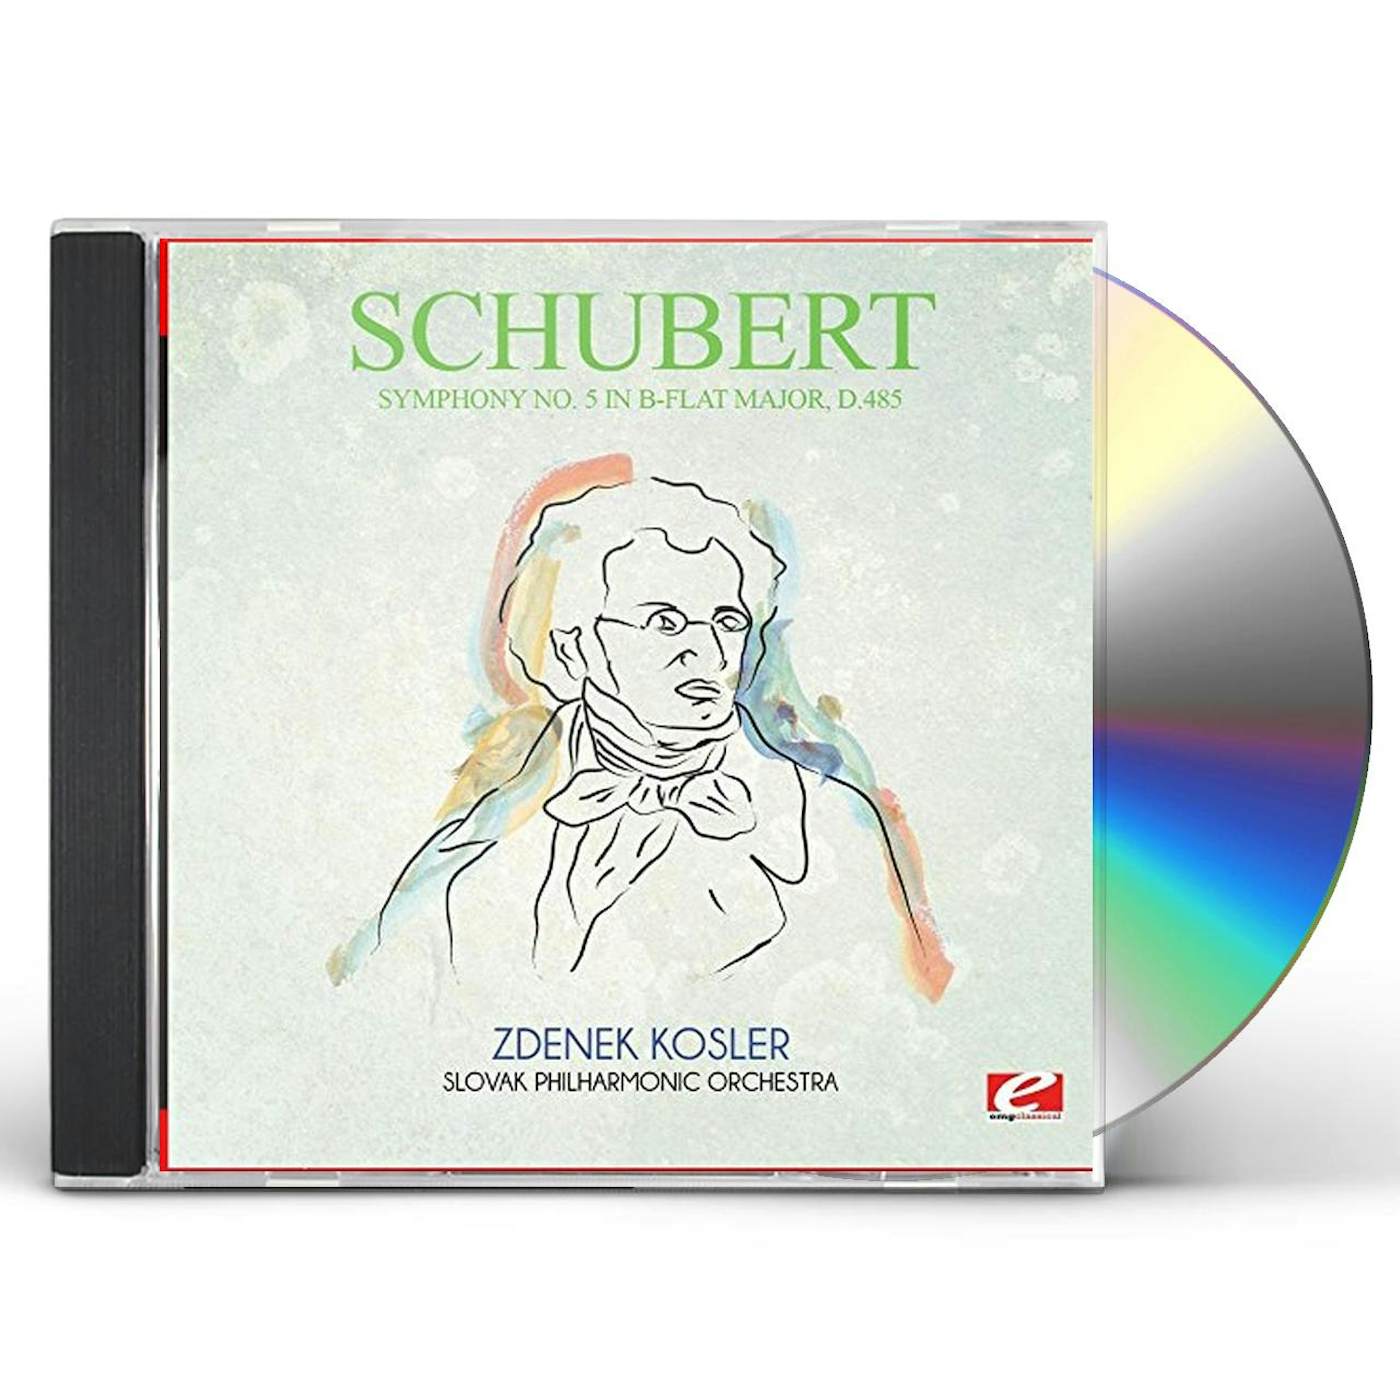 Schubert SYMPHONY NO. 5 IN B-FLAT MAJOR D.485 CD